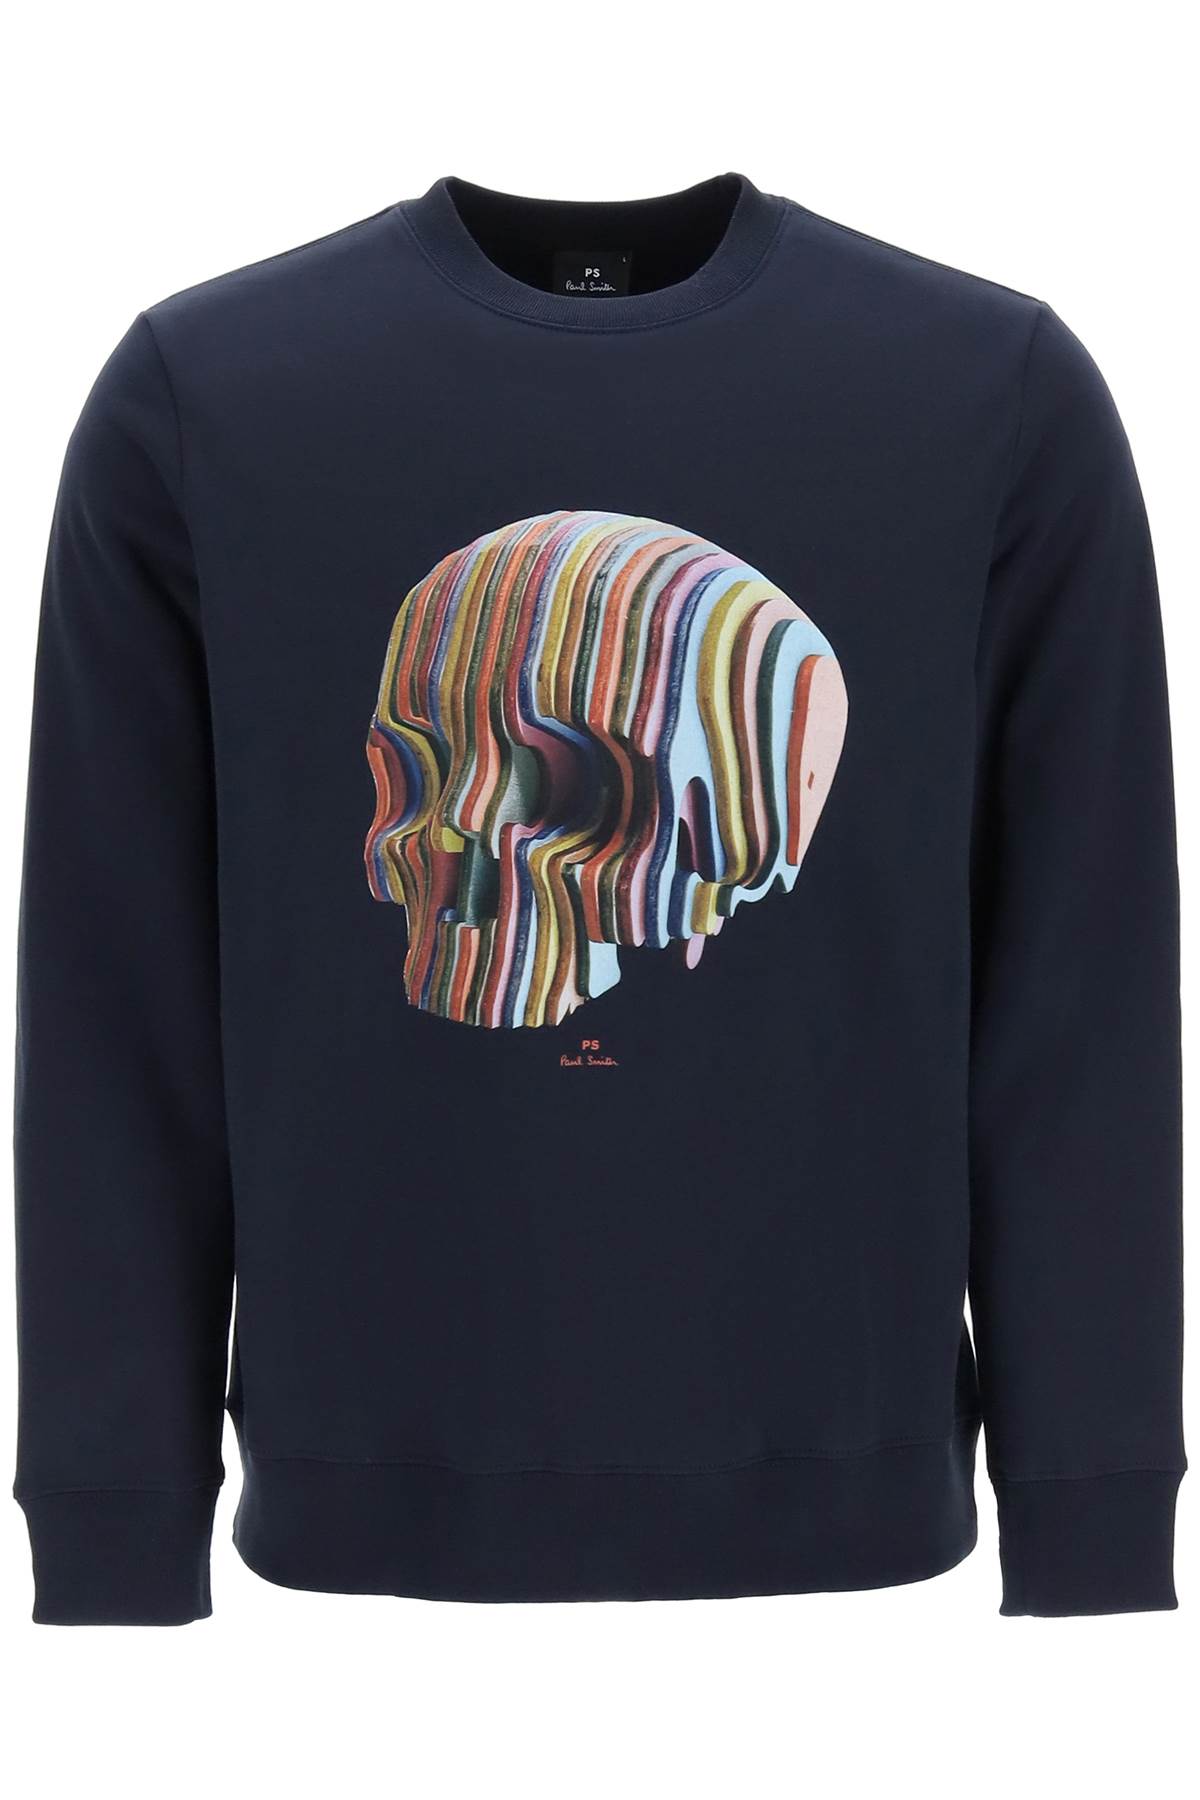 PS by Paul Smith Wooden Stripe Skull Print Sweatshirt In Organic Cotton